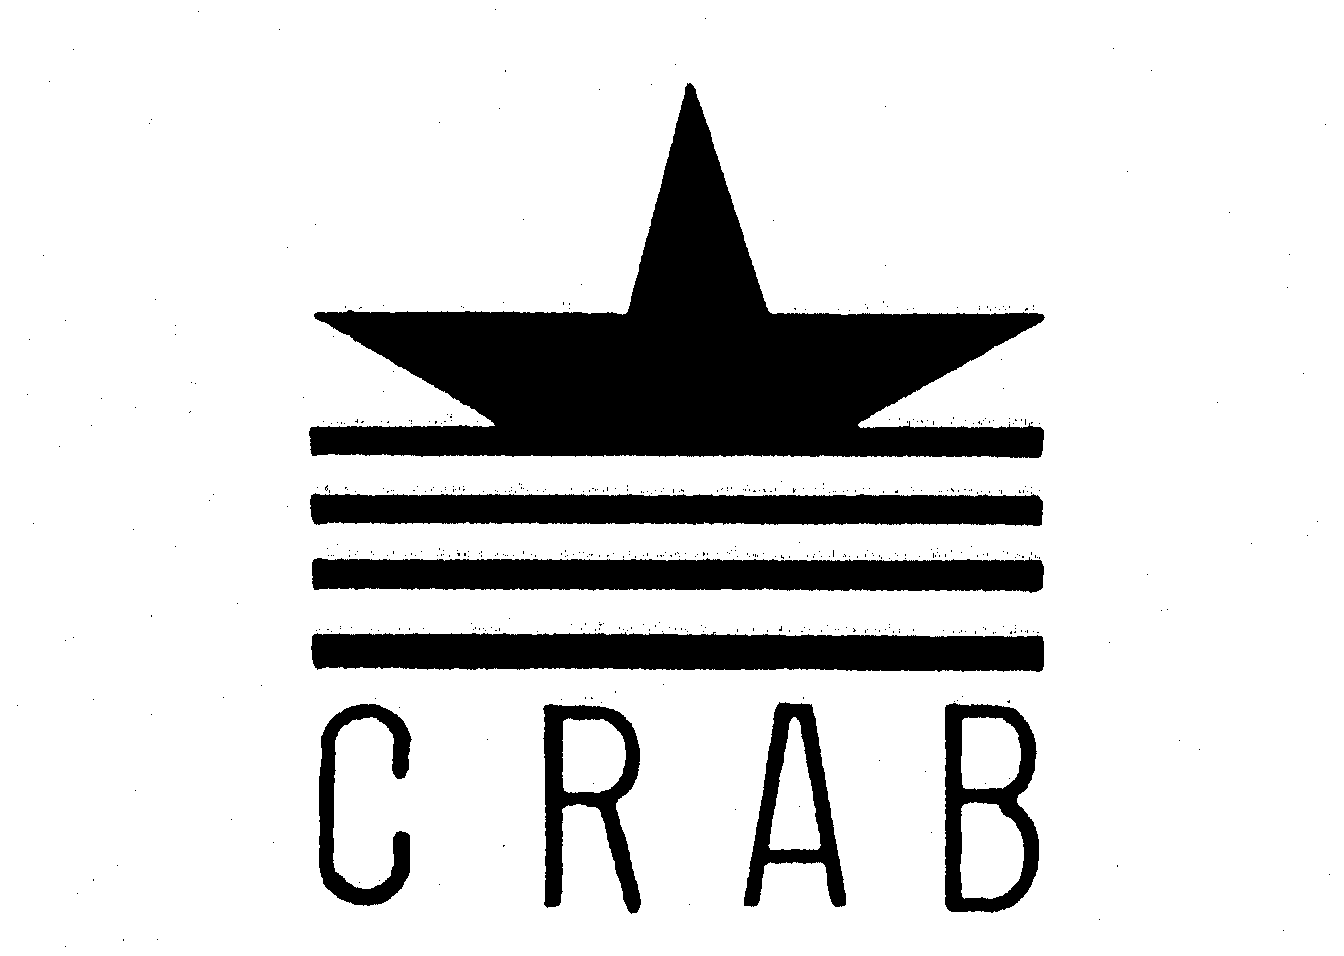 Trademark Logo CRAB